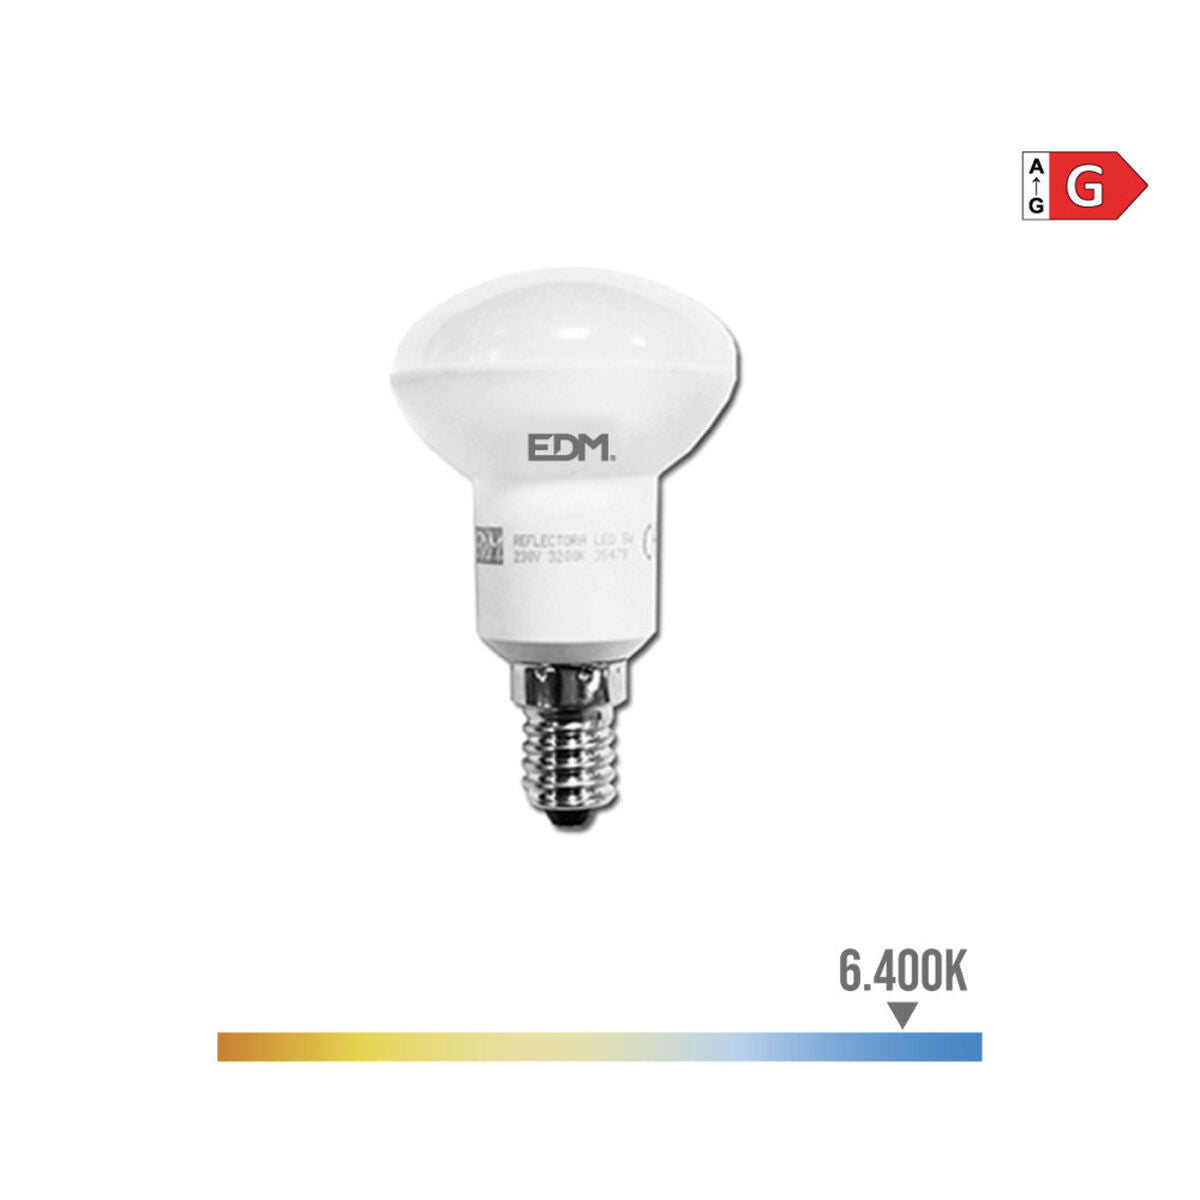 LED lamp EDM Reflector G 5 W E14 350 lm Ø 4,5 x 8 cm (6400 K)